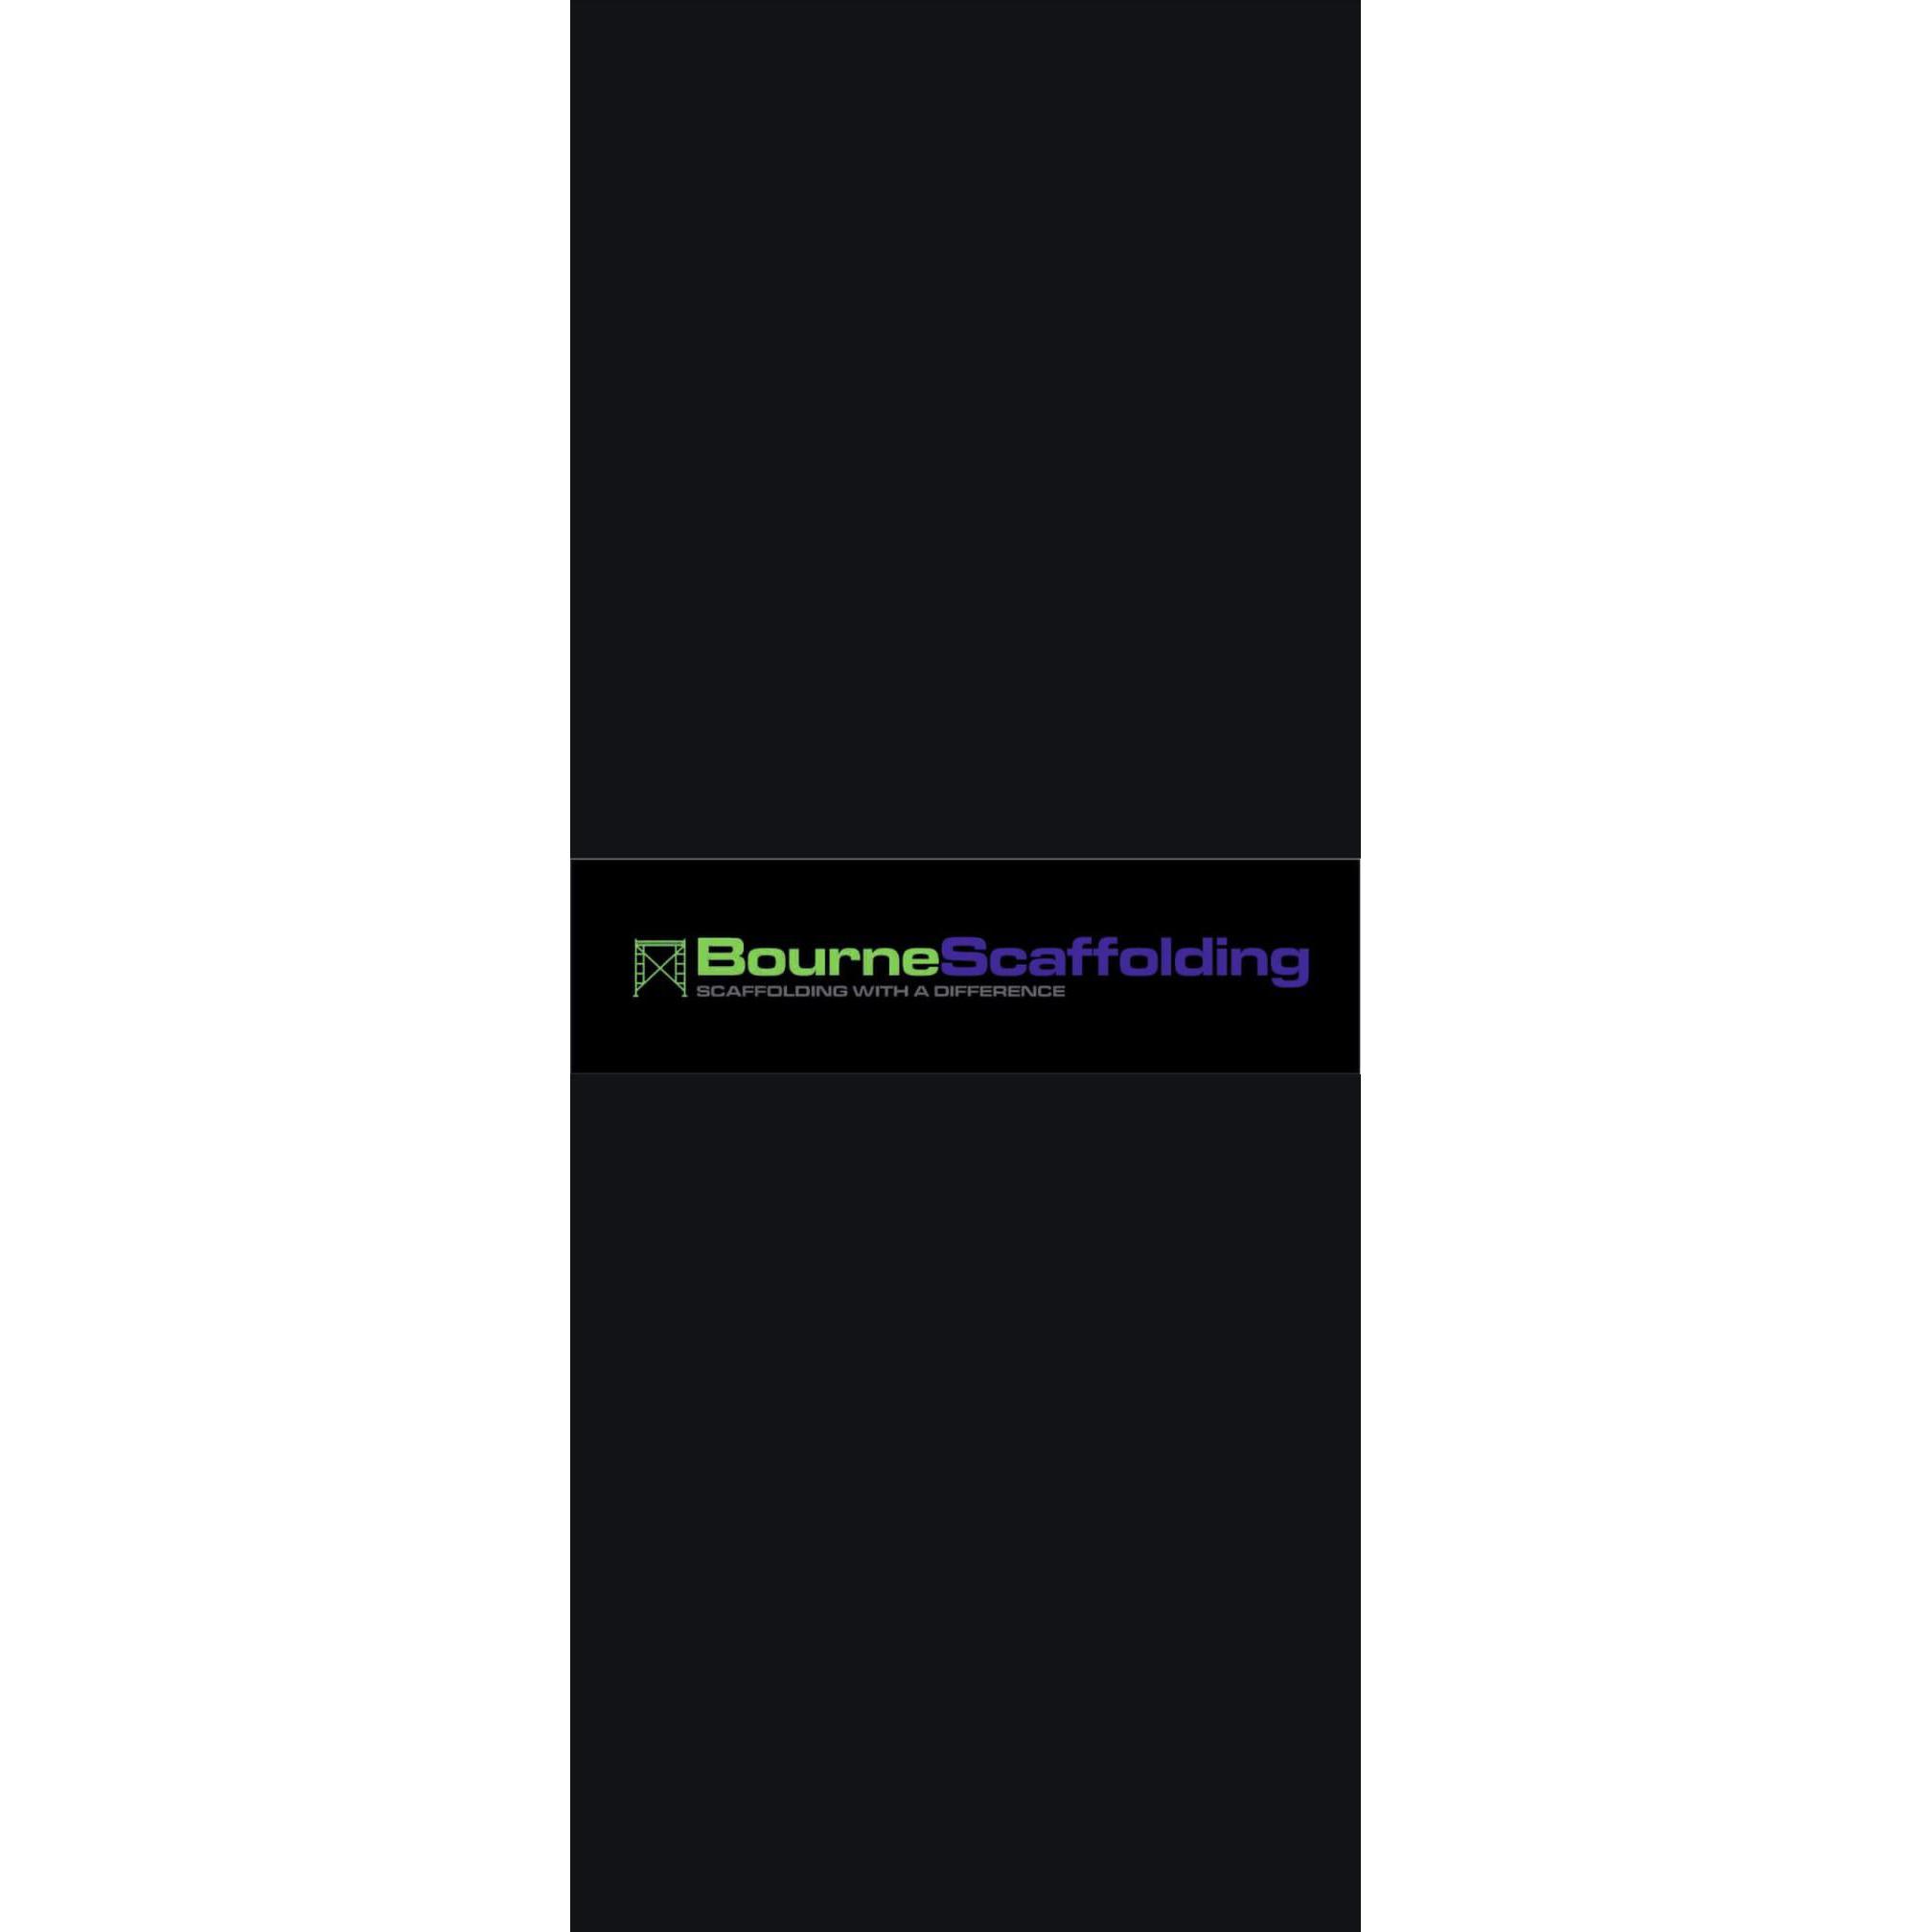 Bourne Scaffolding Services Ltd logo